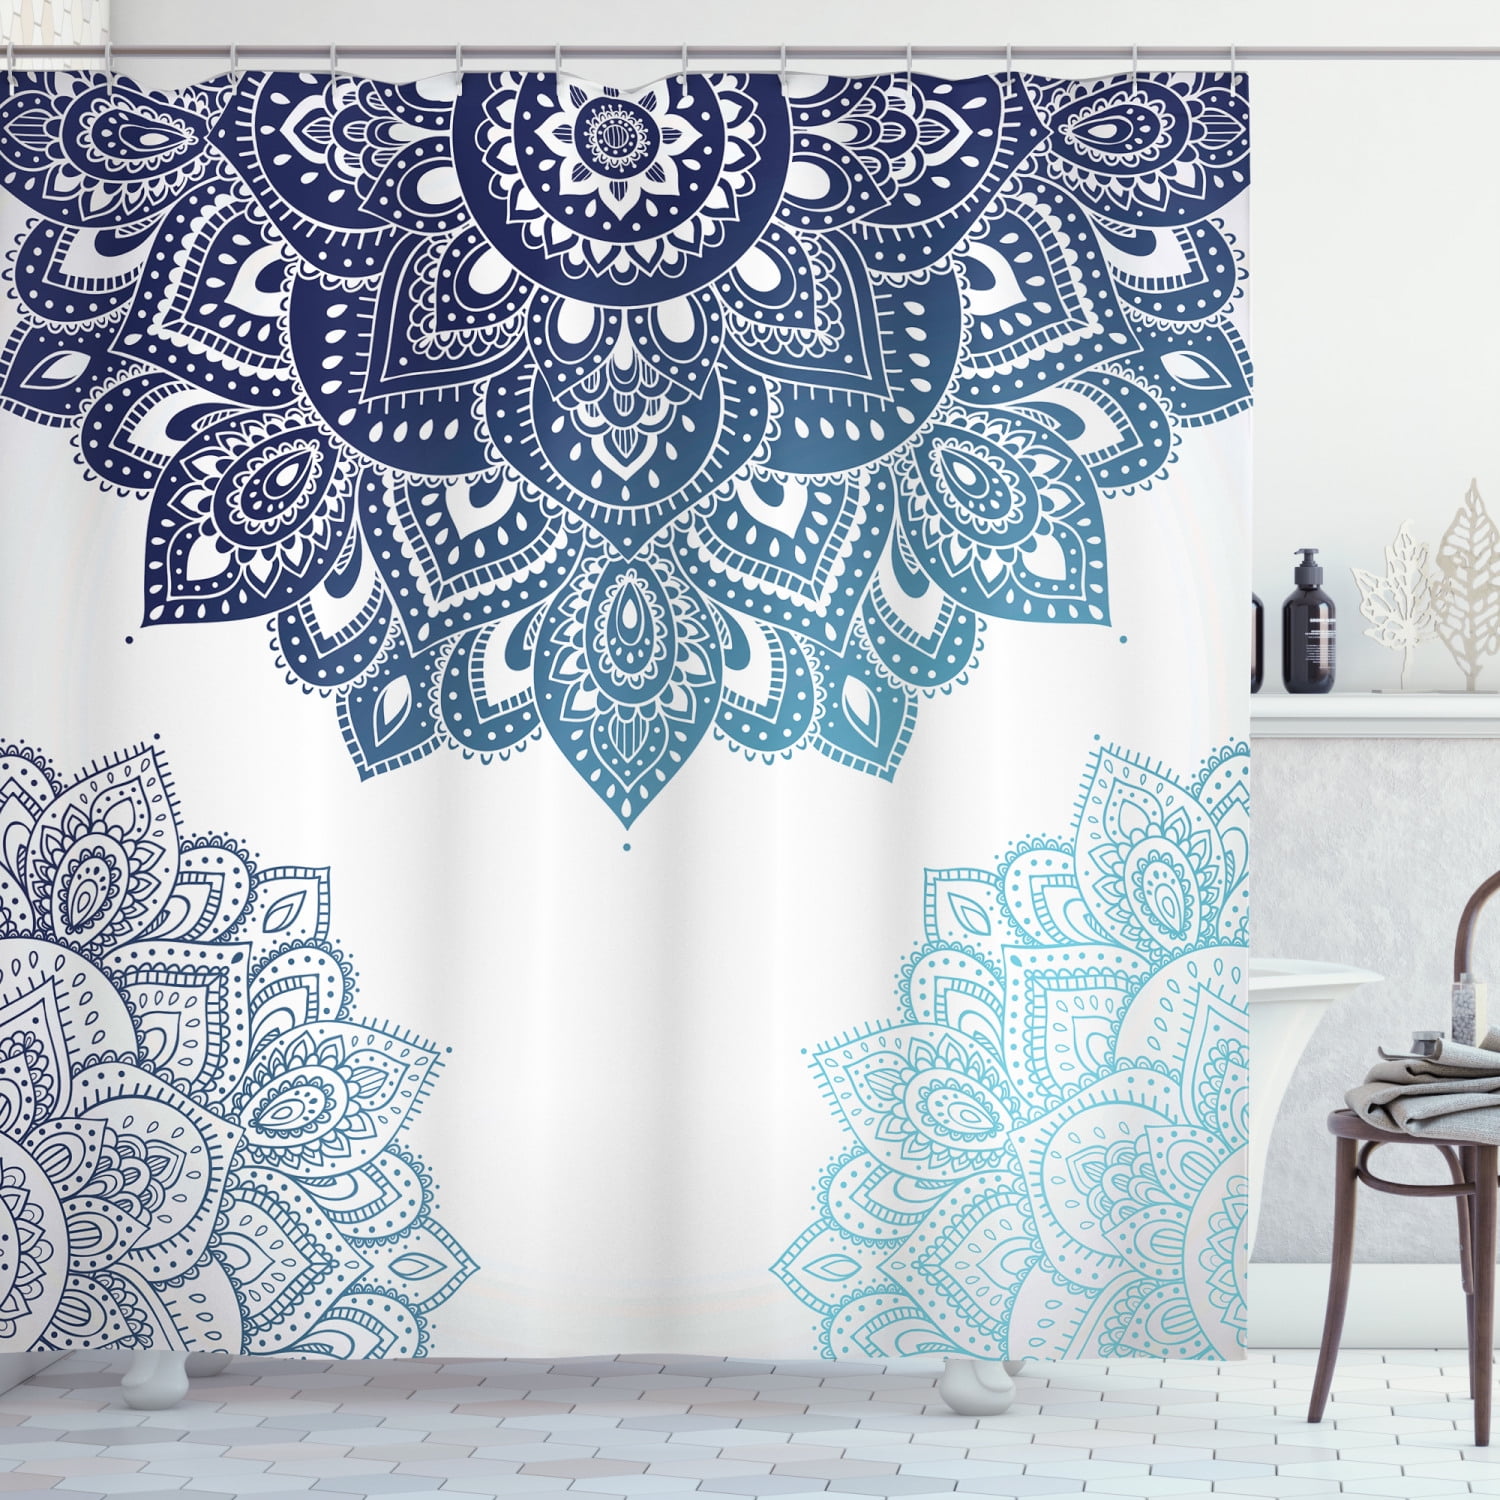 Ombre Mandala Pattern Shower Curtain Fabric Decor Set with Hooks 4 Sizes 